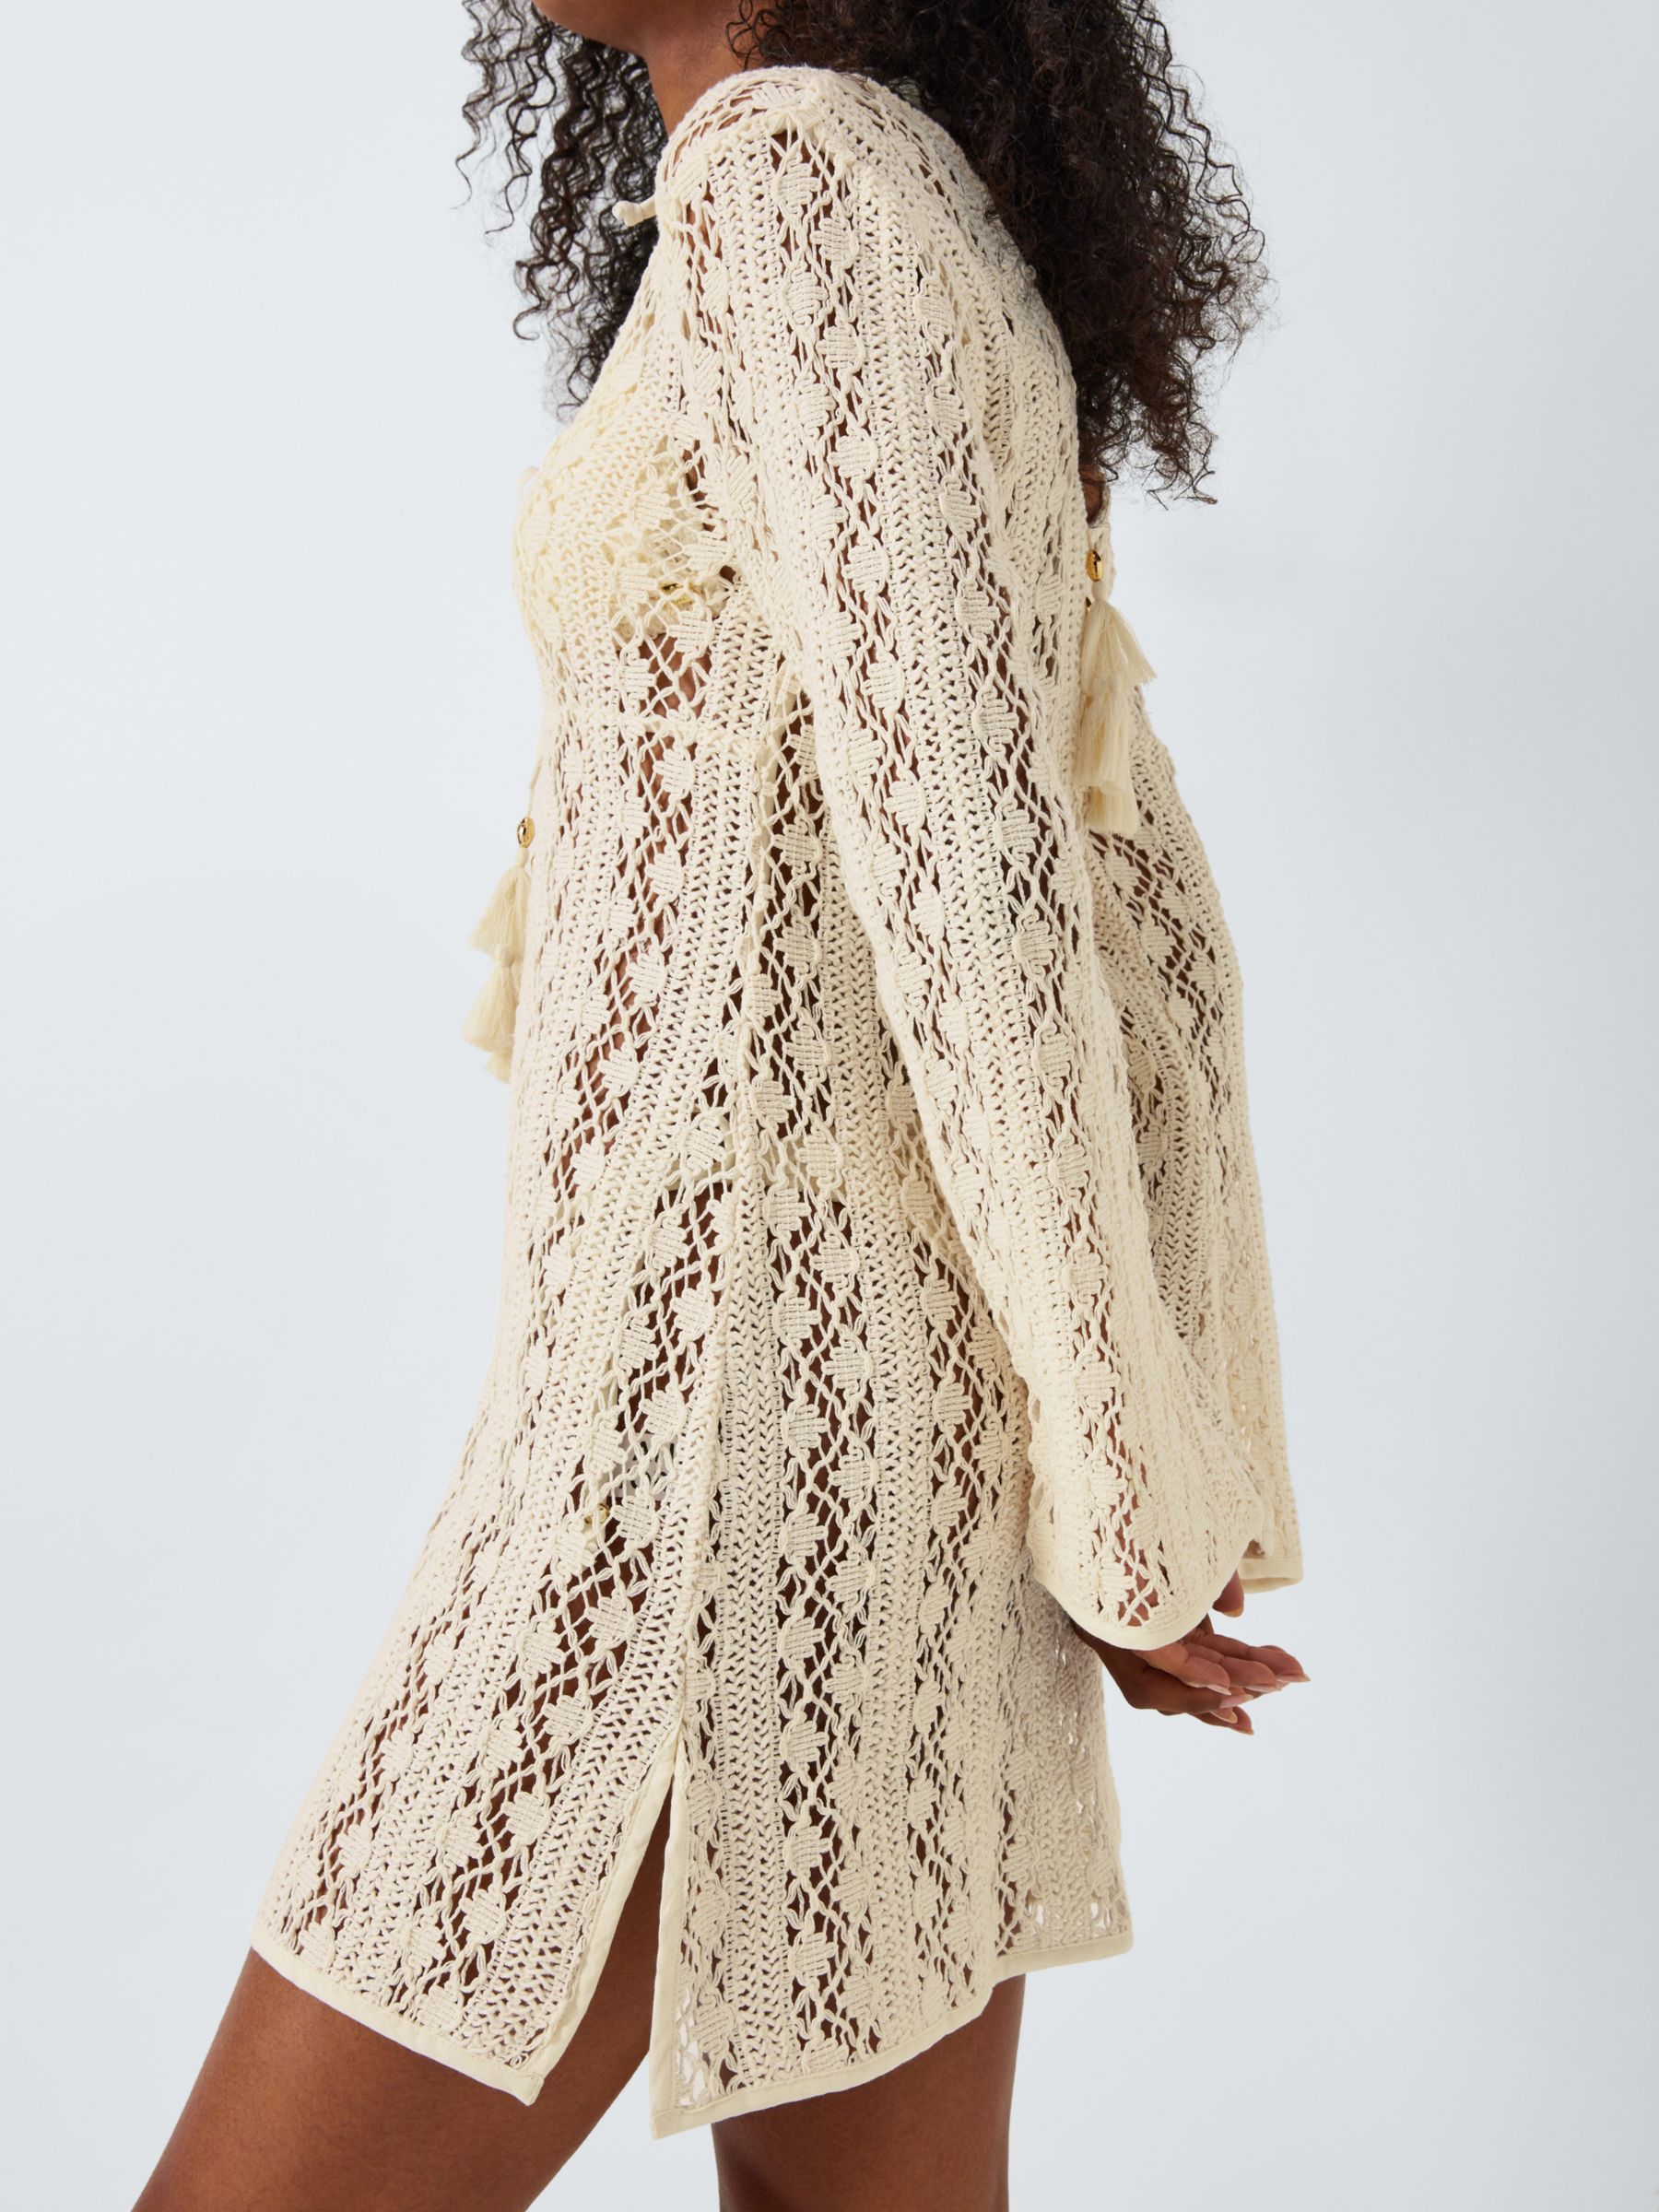 AND/OR Capri Crochet Mini Beach Dress, Cream, M